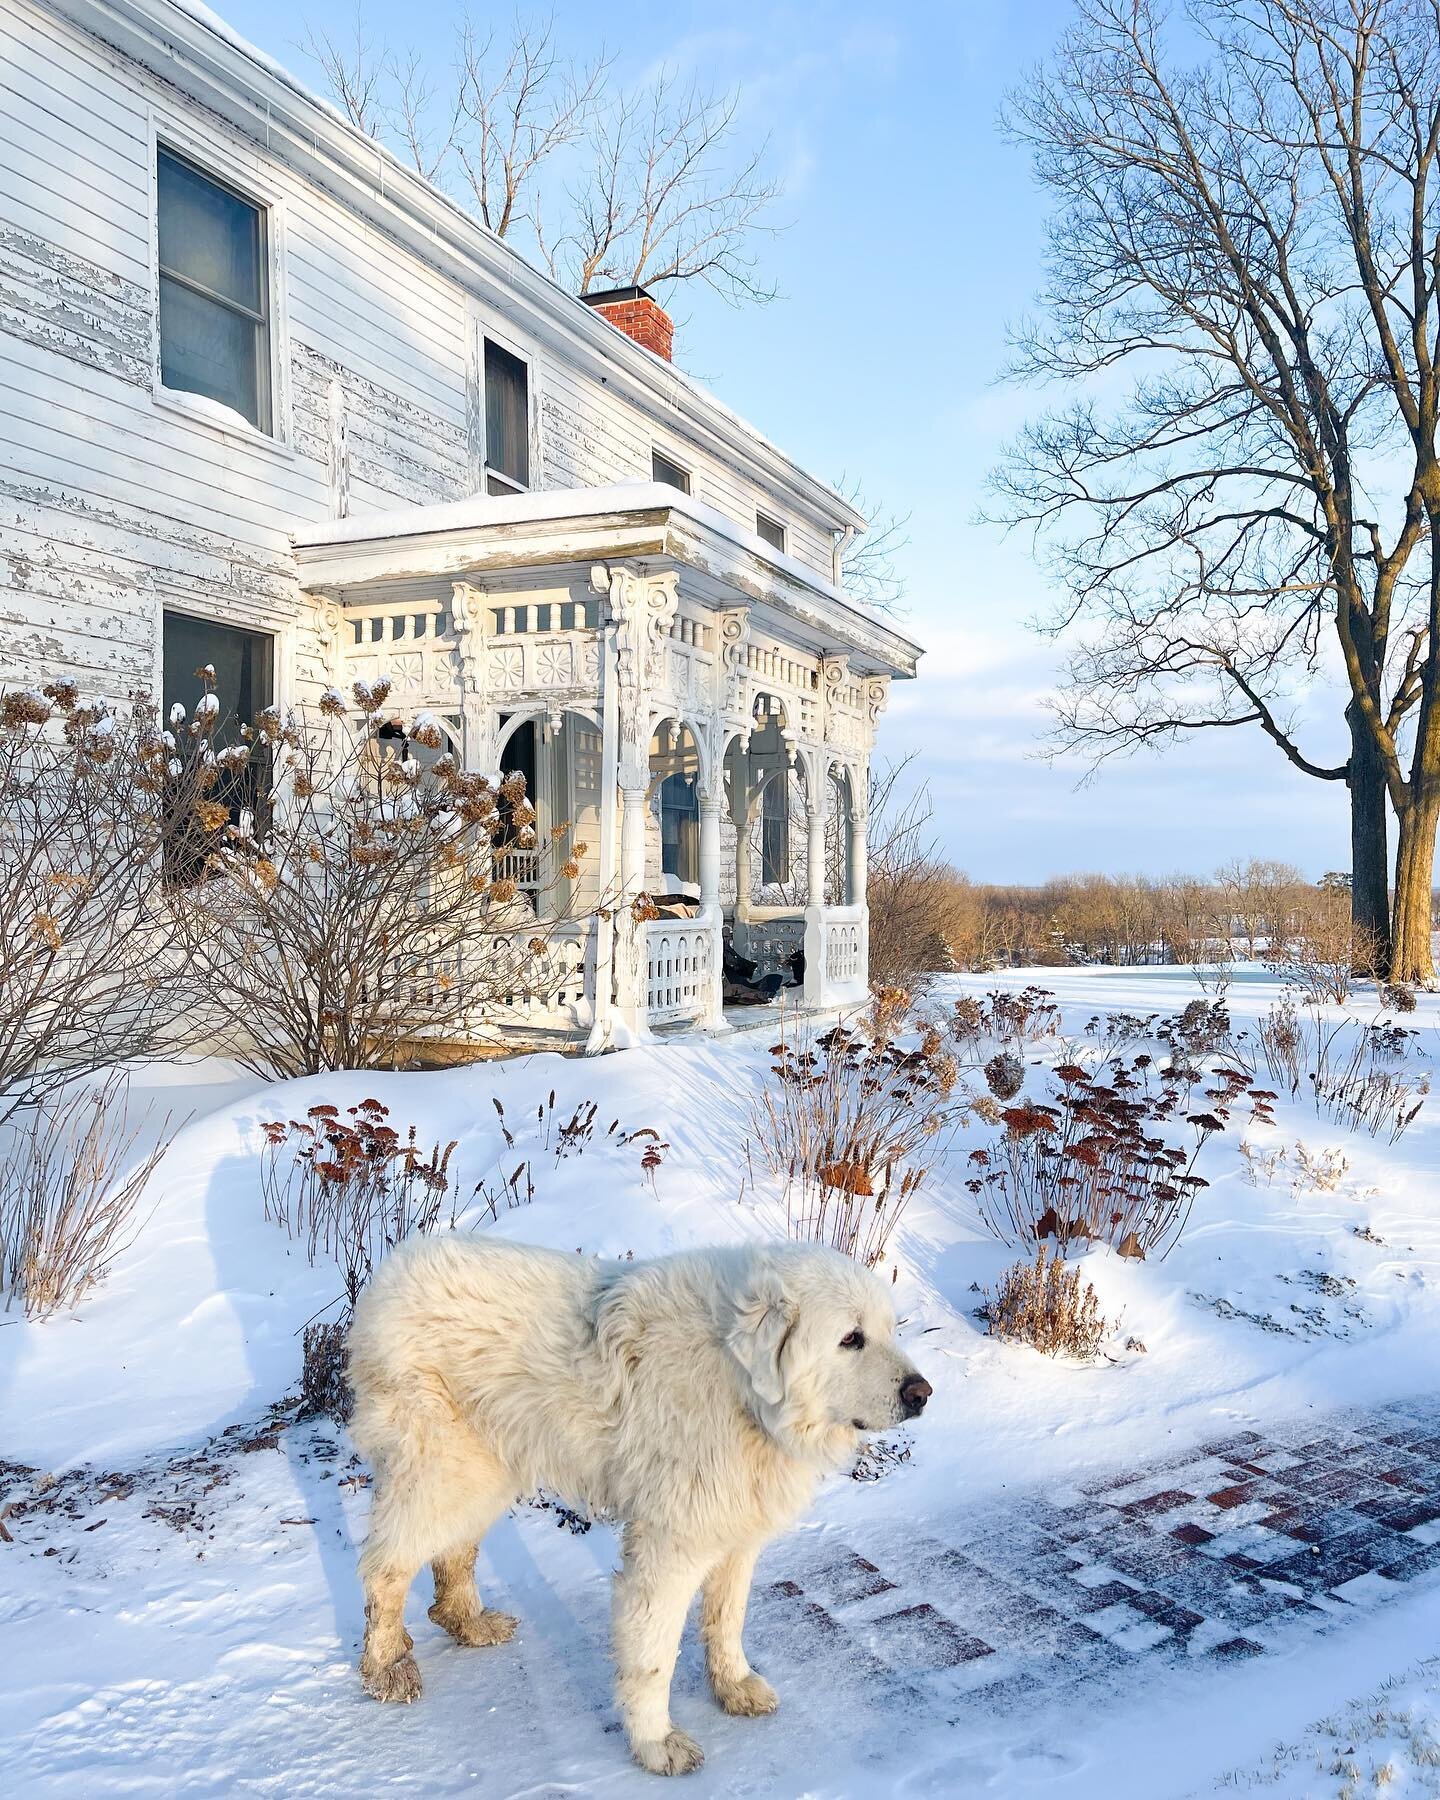 Happy snowy Friday everyone! ❄️💙

#dogsofinstagram #snowday #farmhouse #bluebellfarm #snowscene